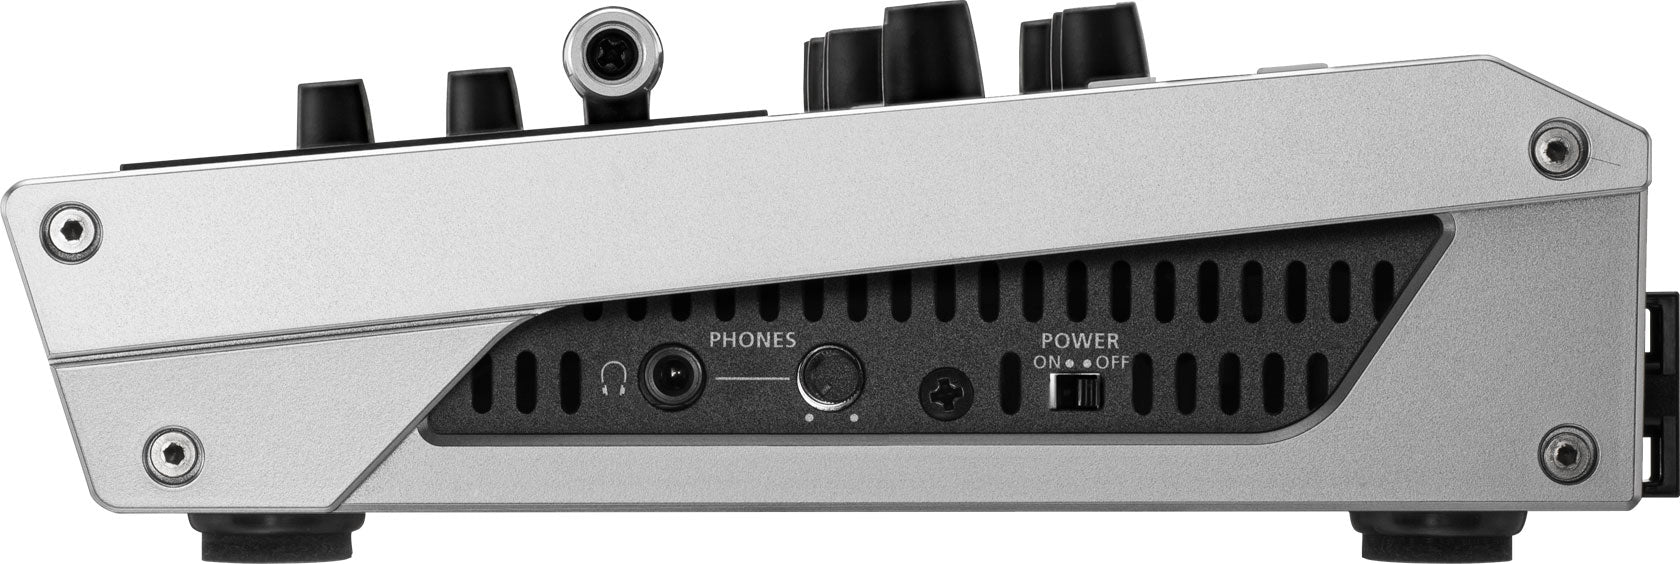 Roland V-8HD HD Video Switcher